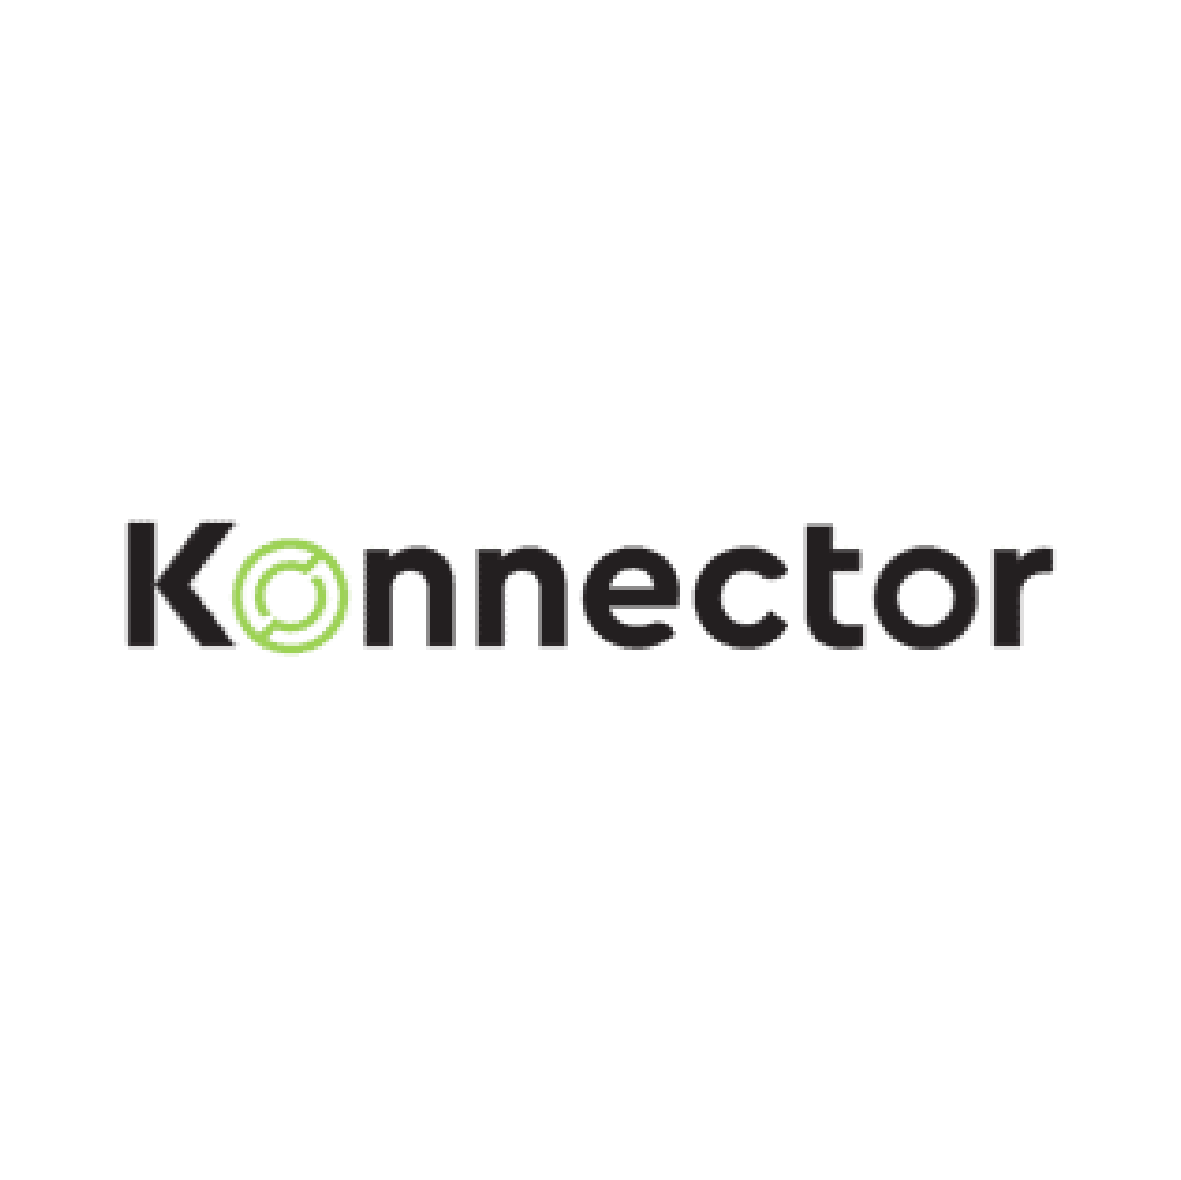 Konnector Logo